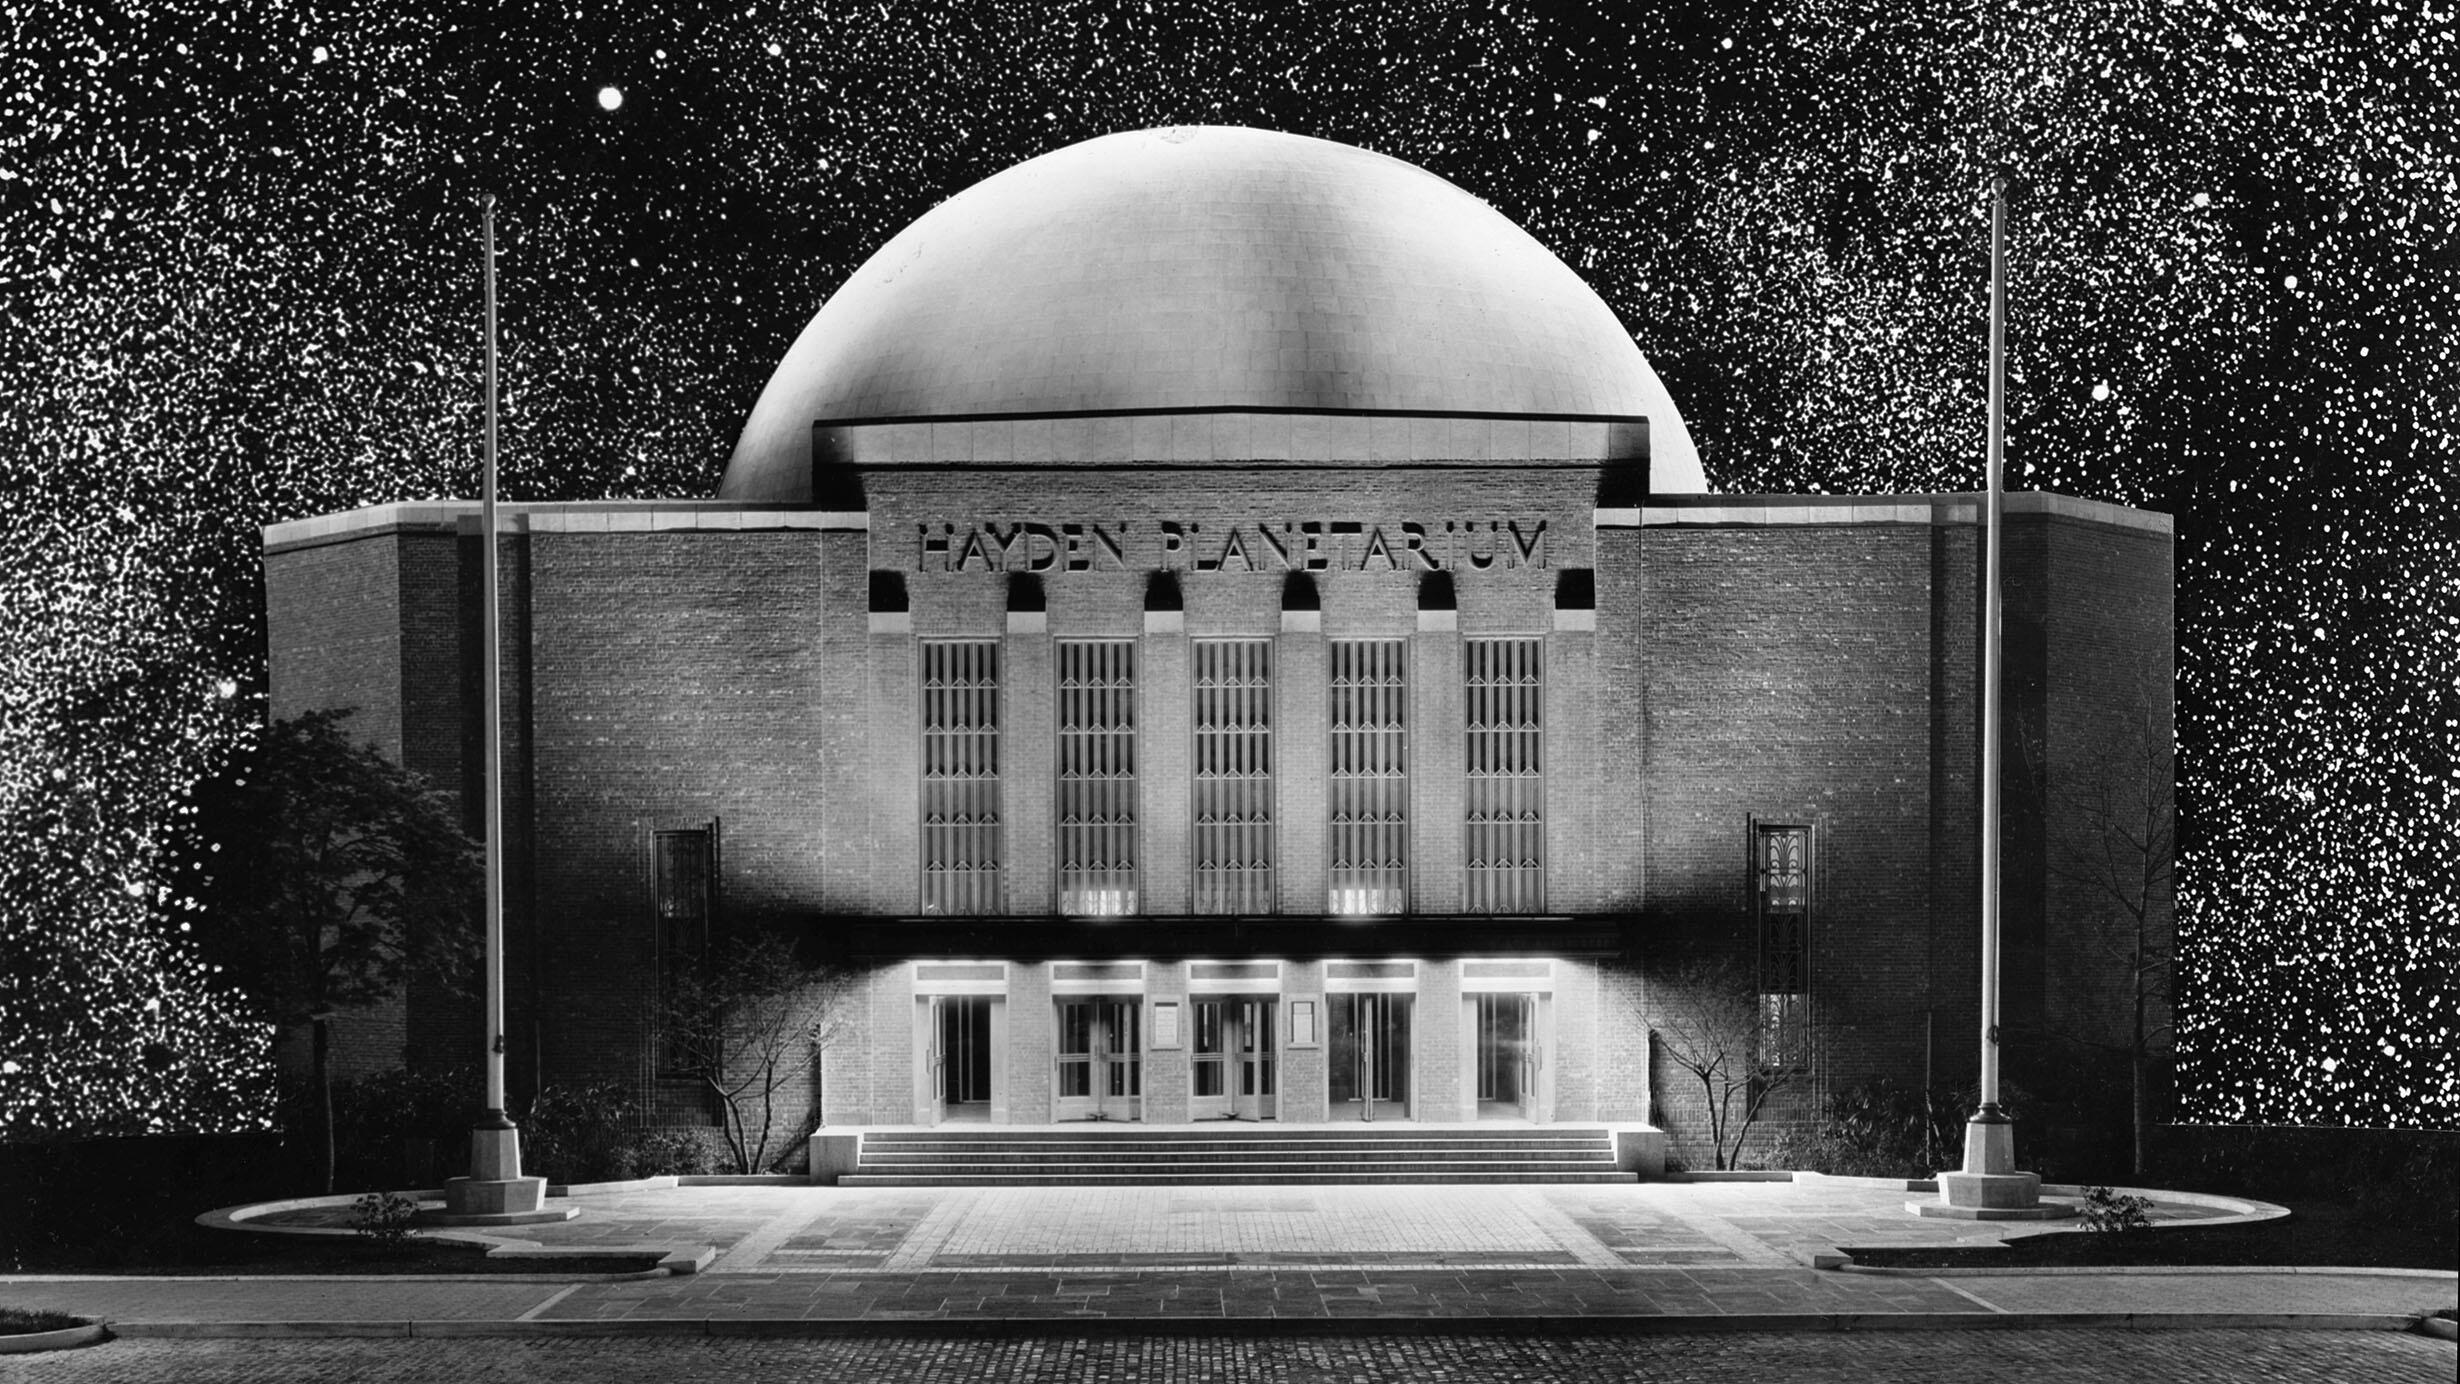 Archival view of the exterior of the Hayden Planetarium.